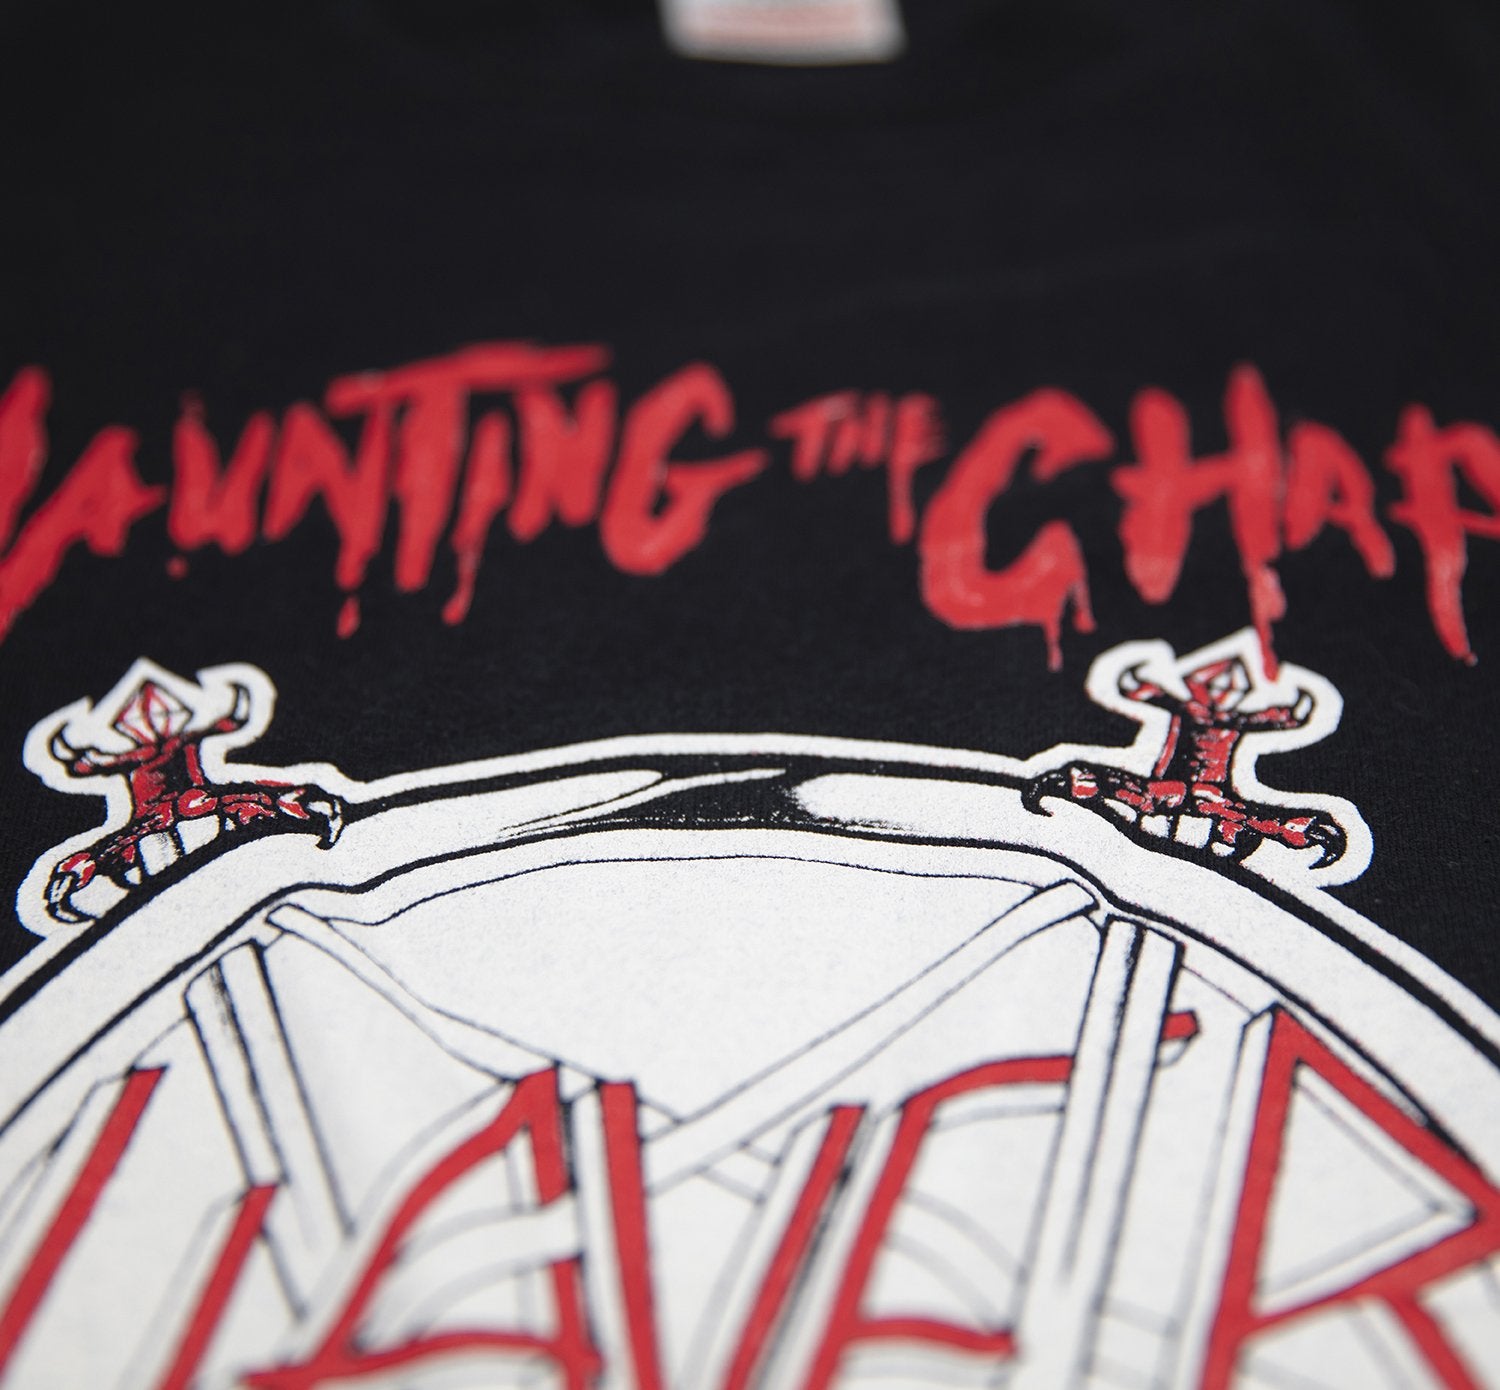 Slayer - Haunting The Chapel Long Sleeve Tour Shirt Size XL